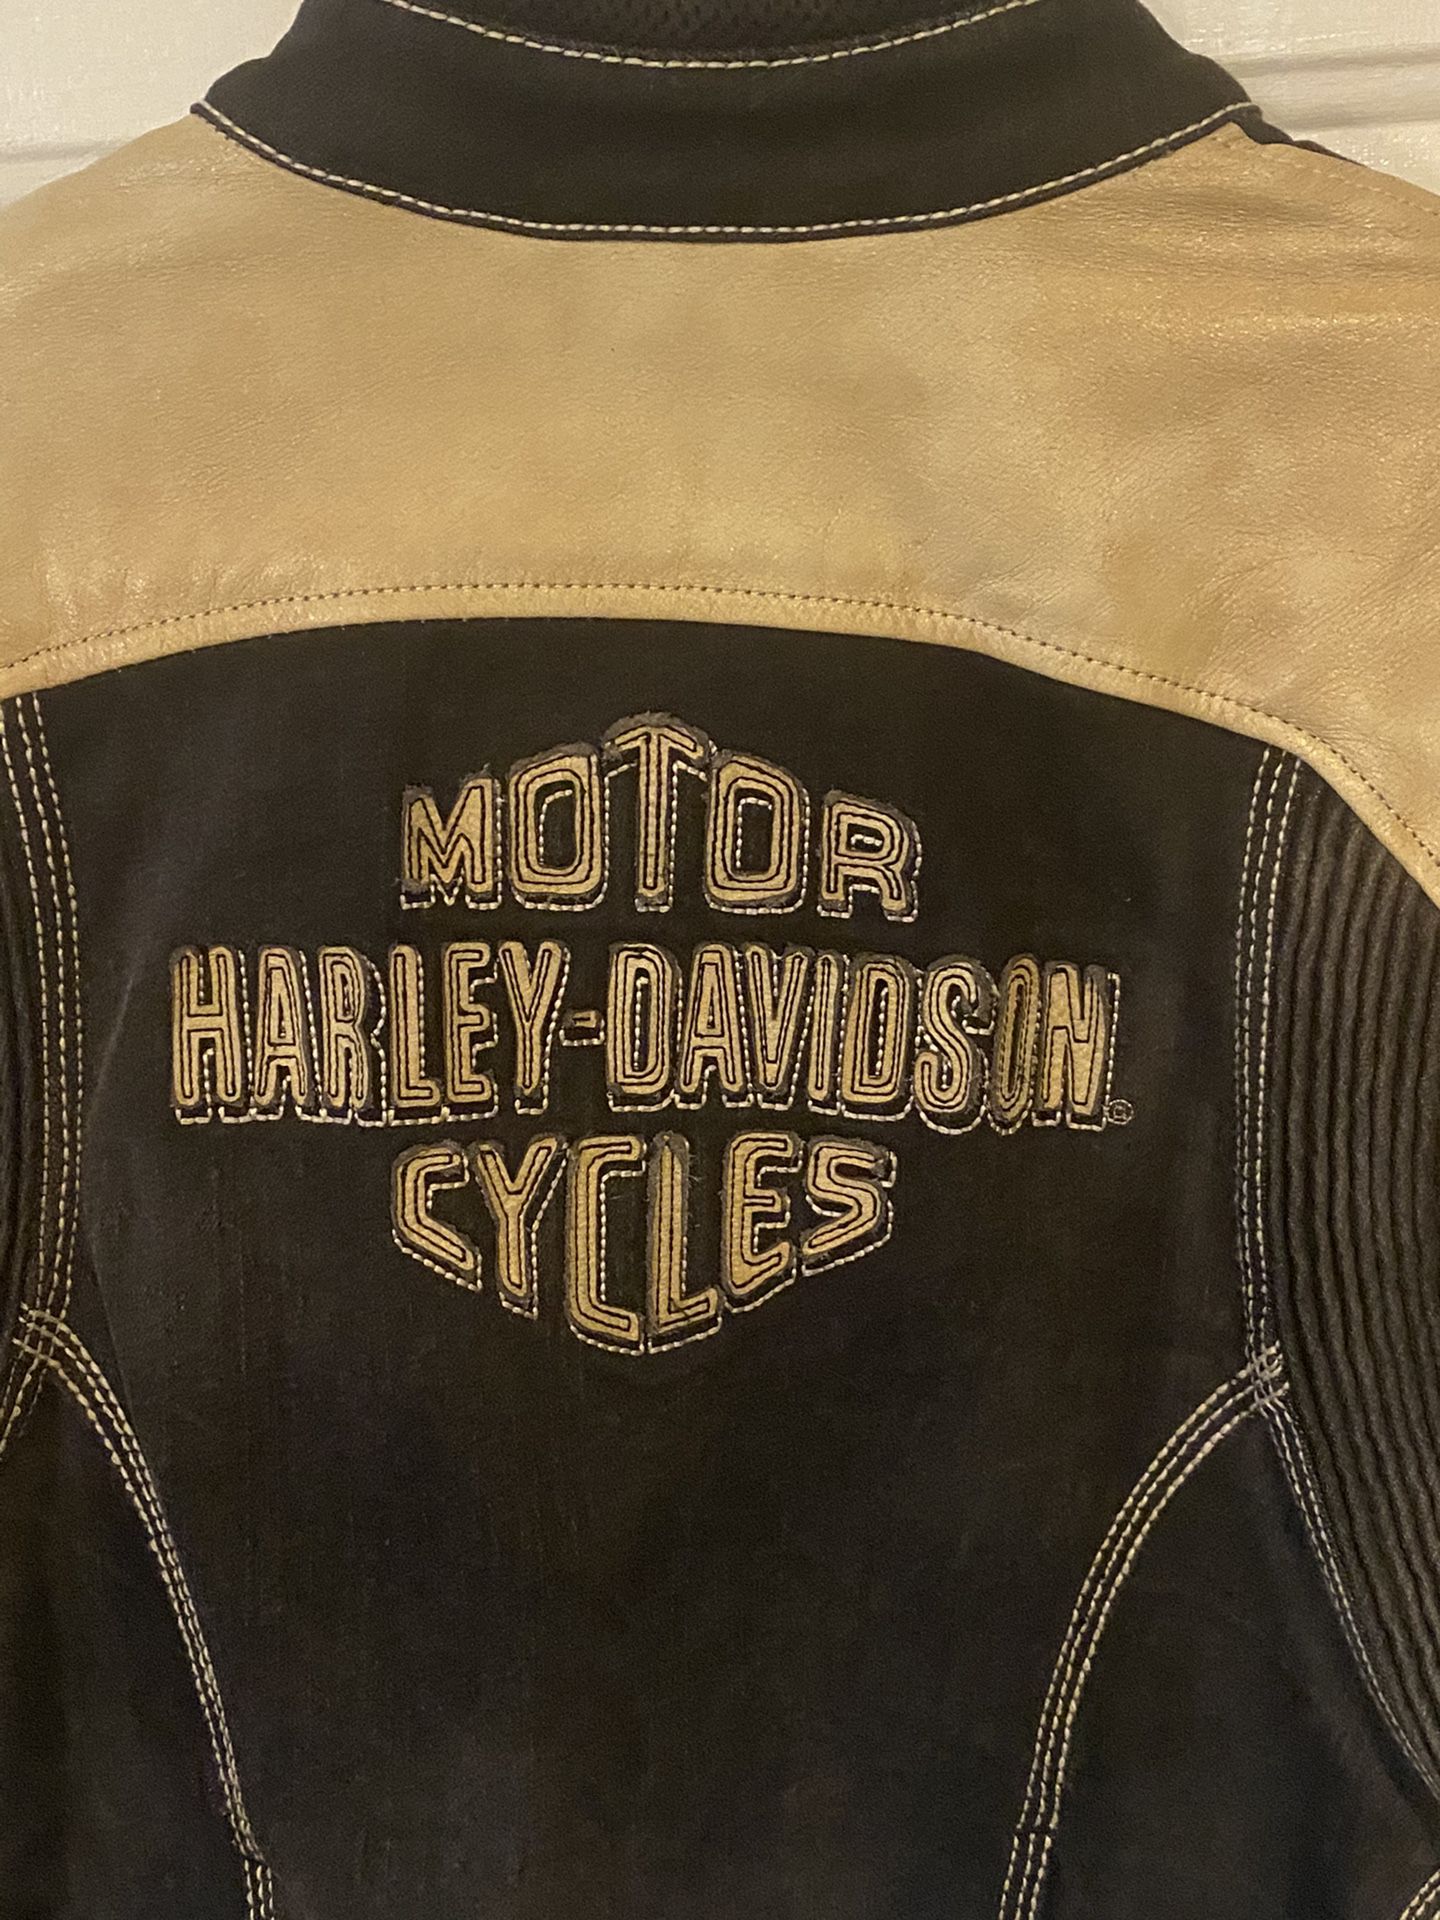 Ladies Harley Davidson Leather Coat Sz. XL $260.00